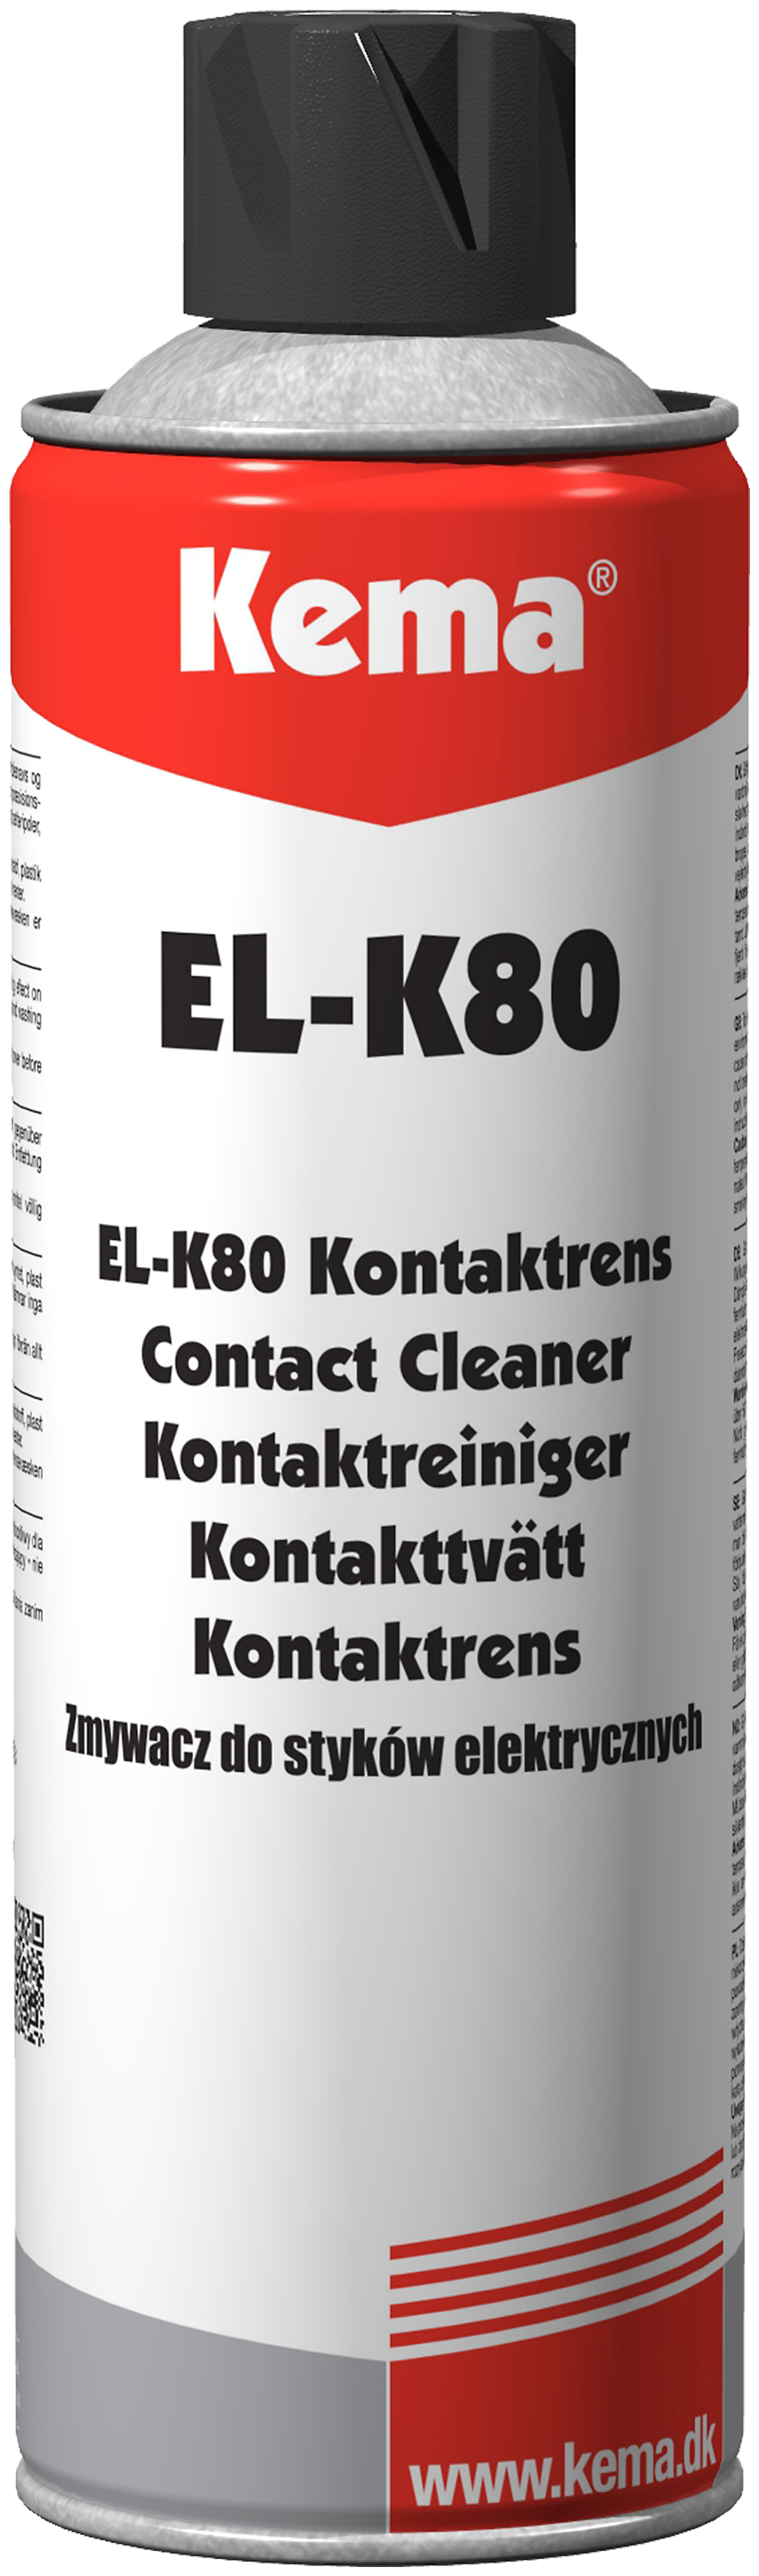 Kema kontaktrens EL-K80 spray 400ml 317369